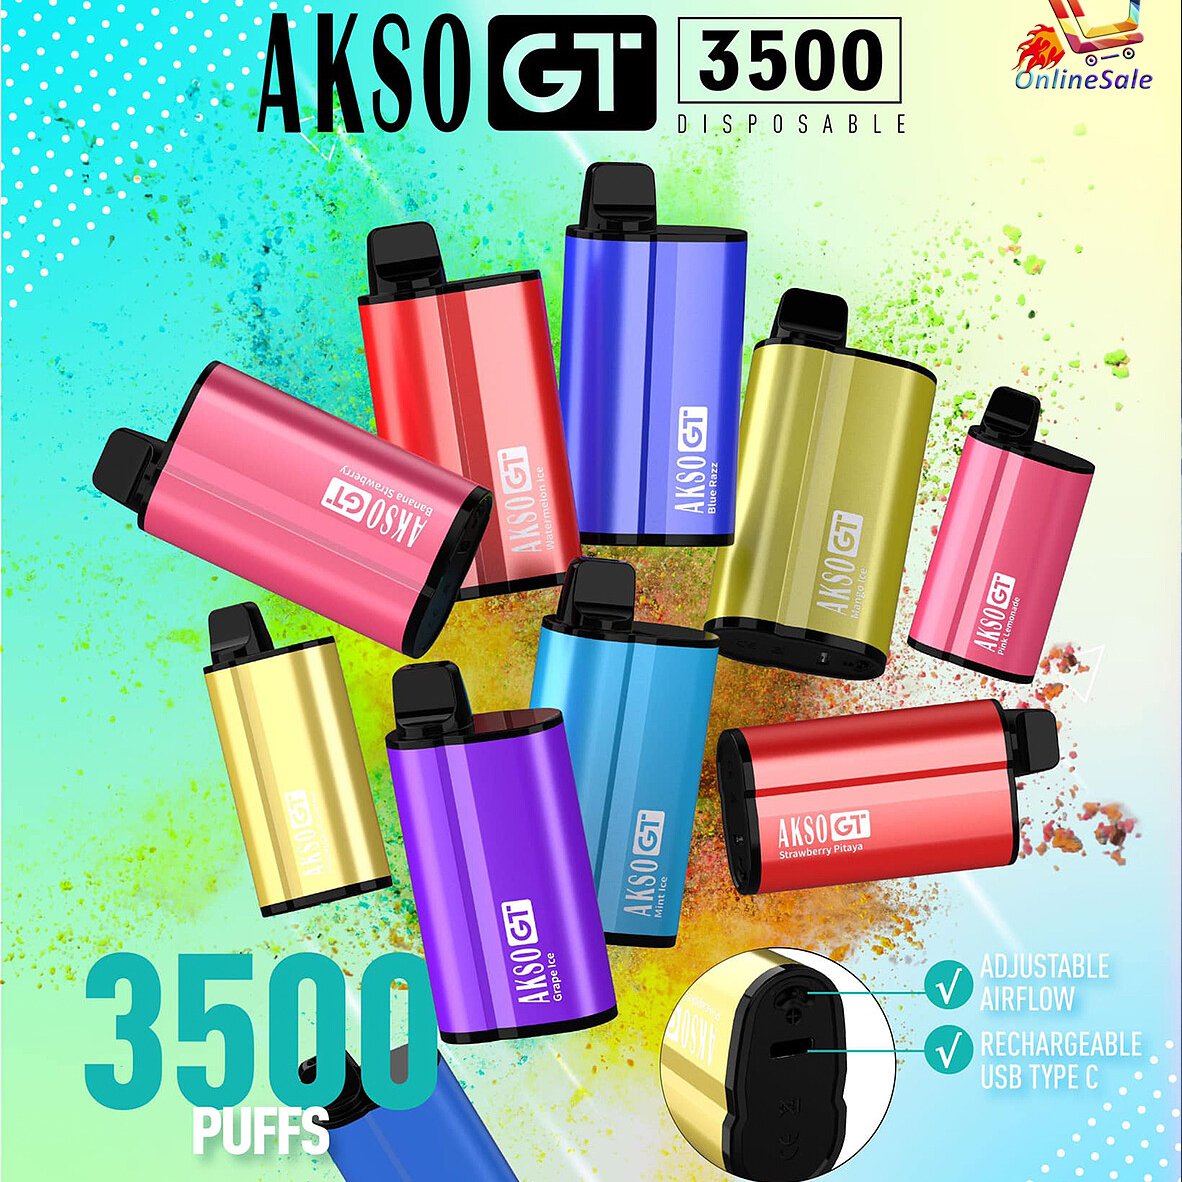 Akso GT 3500 Puff